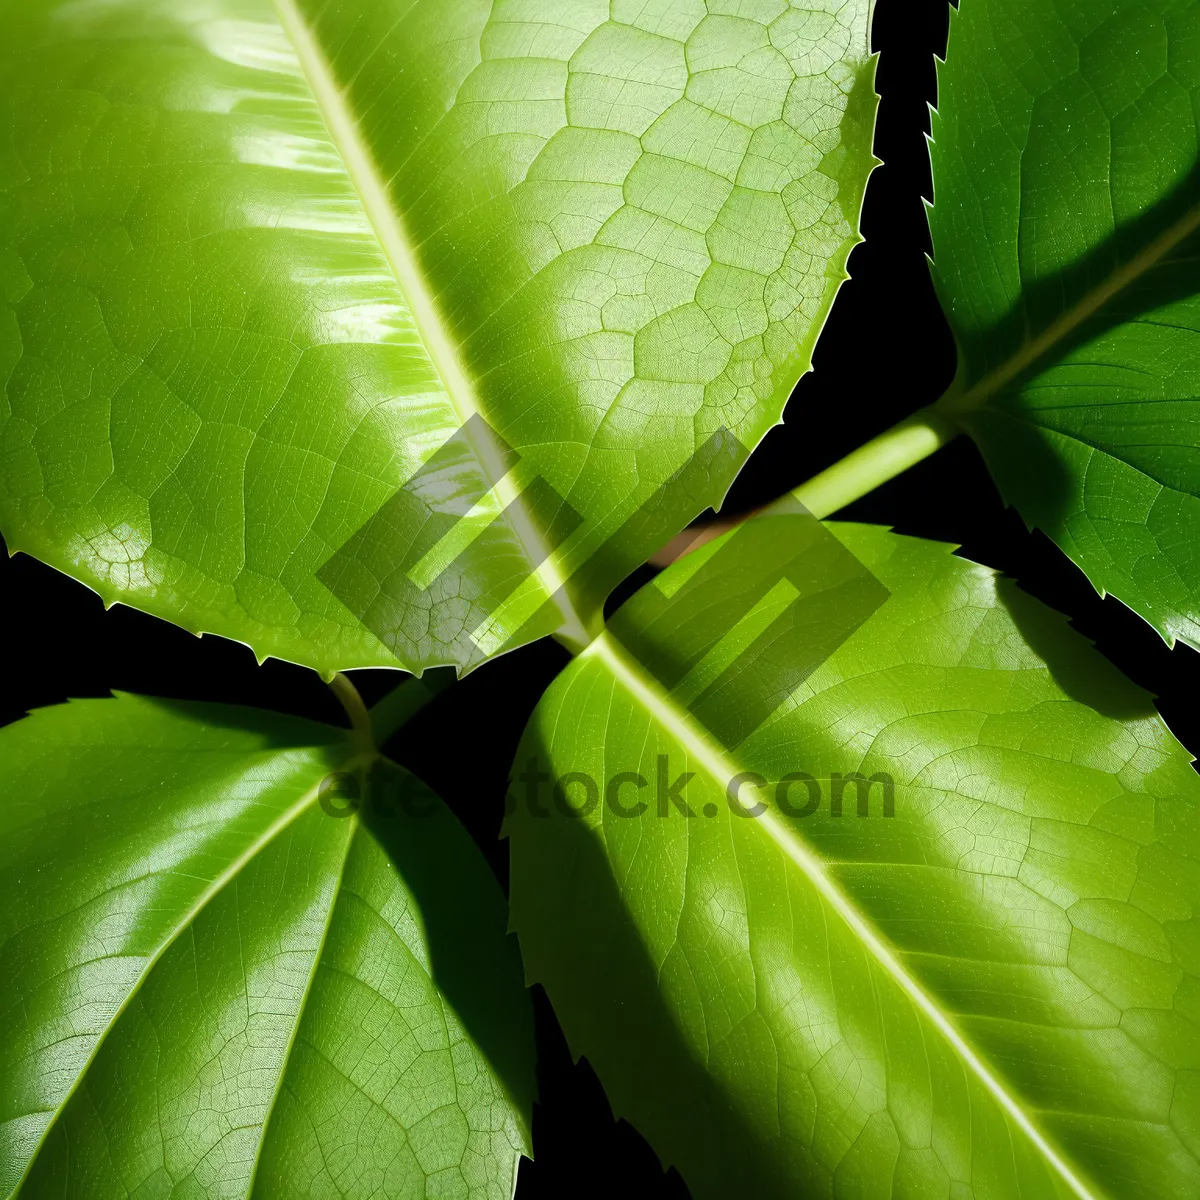 Picture of Vibrant Taro Leaf in Lush Garden Setting